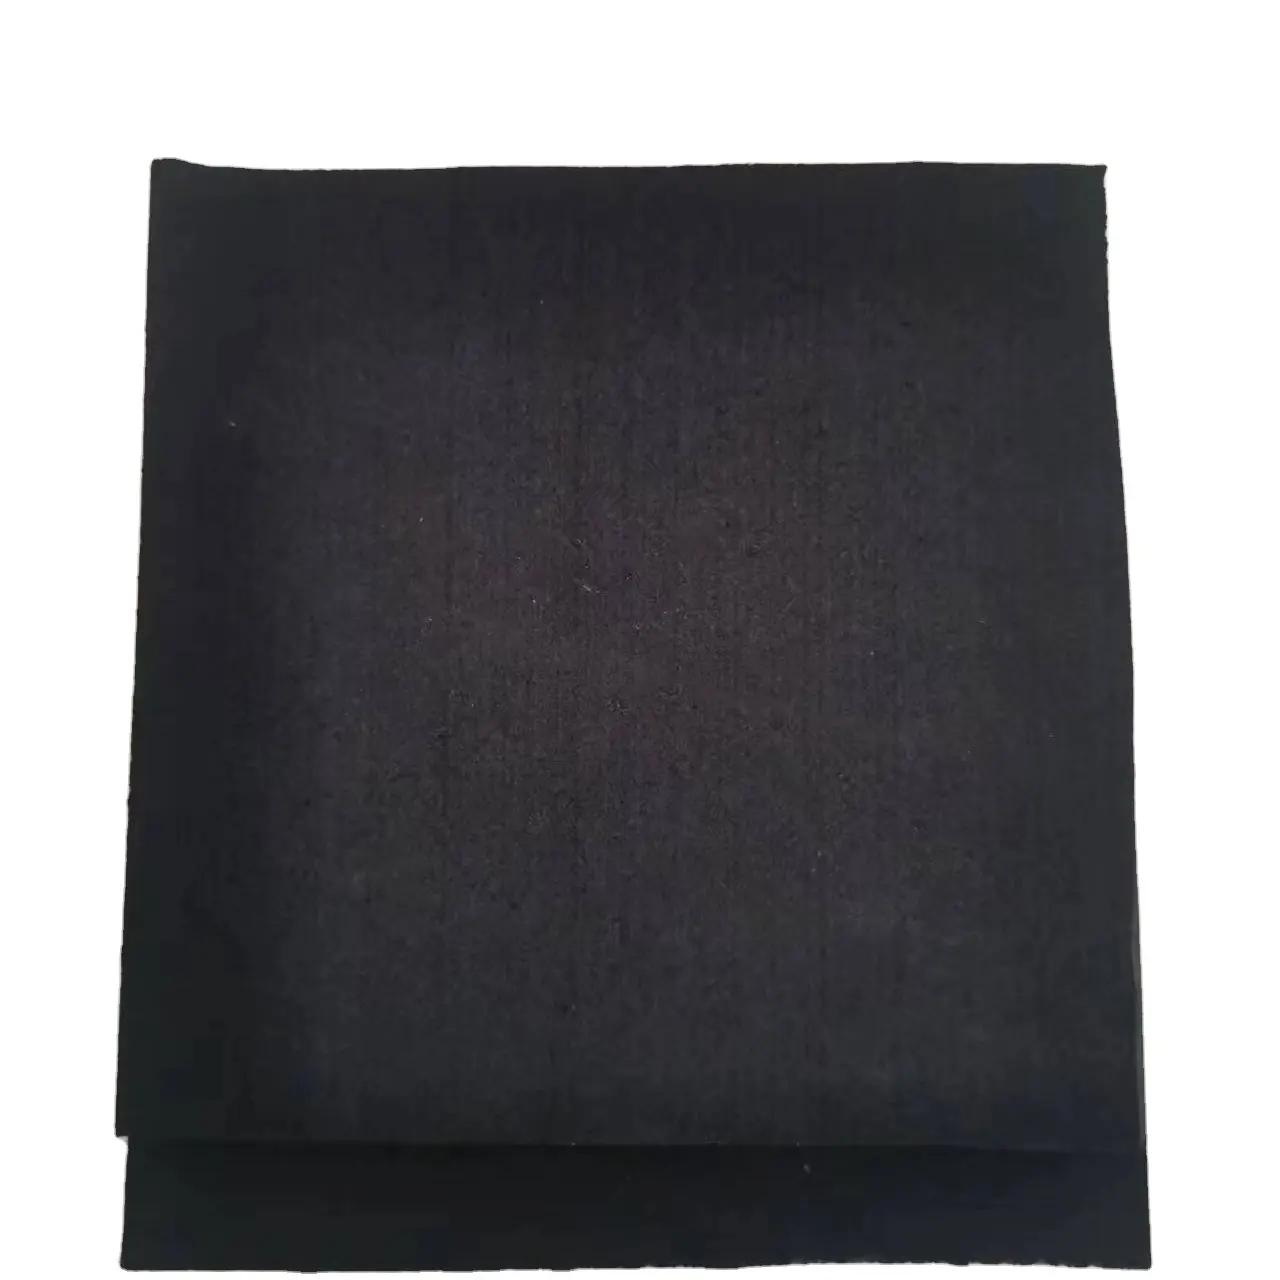 Made in china Waterproof Anti-slip rubber floor mat buy rubber mat